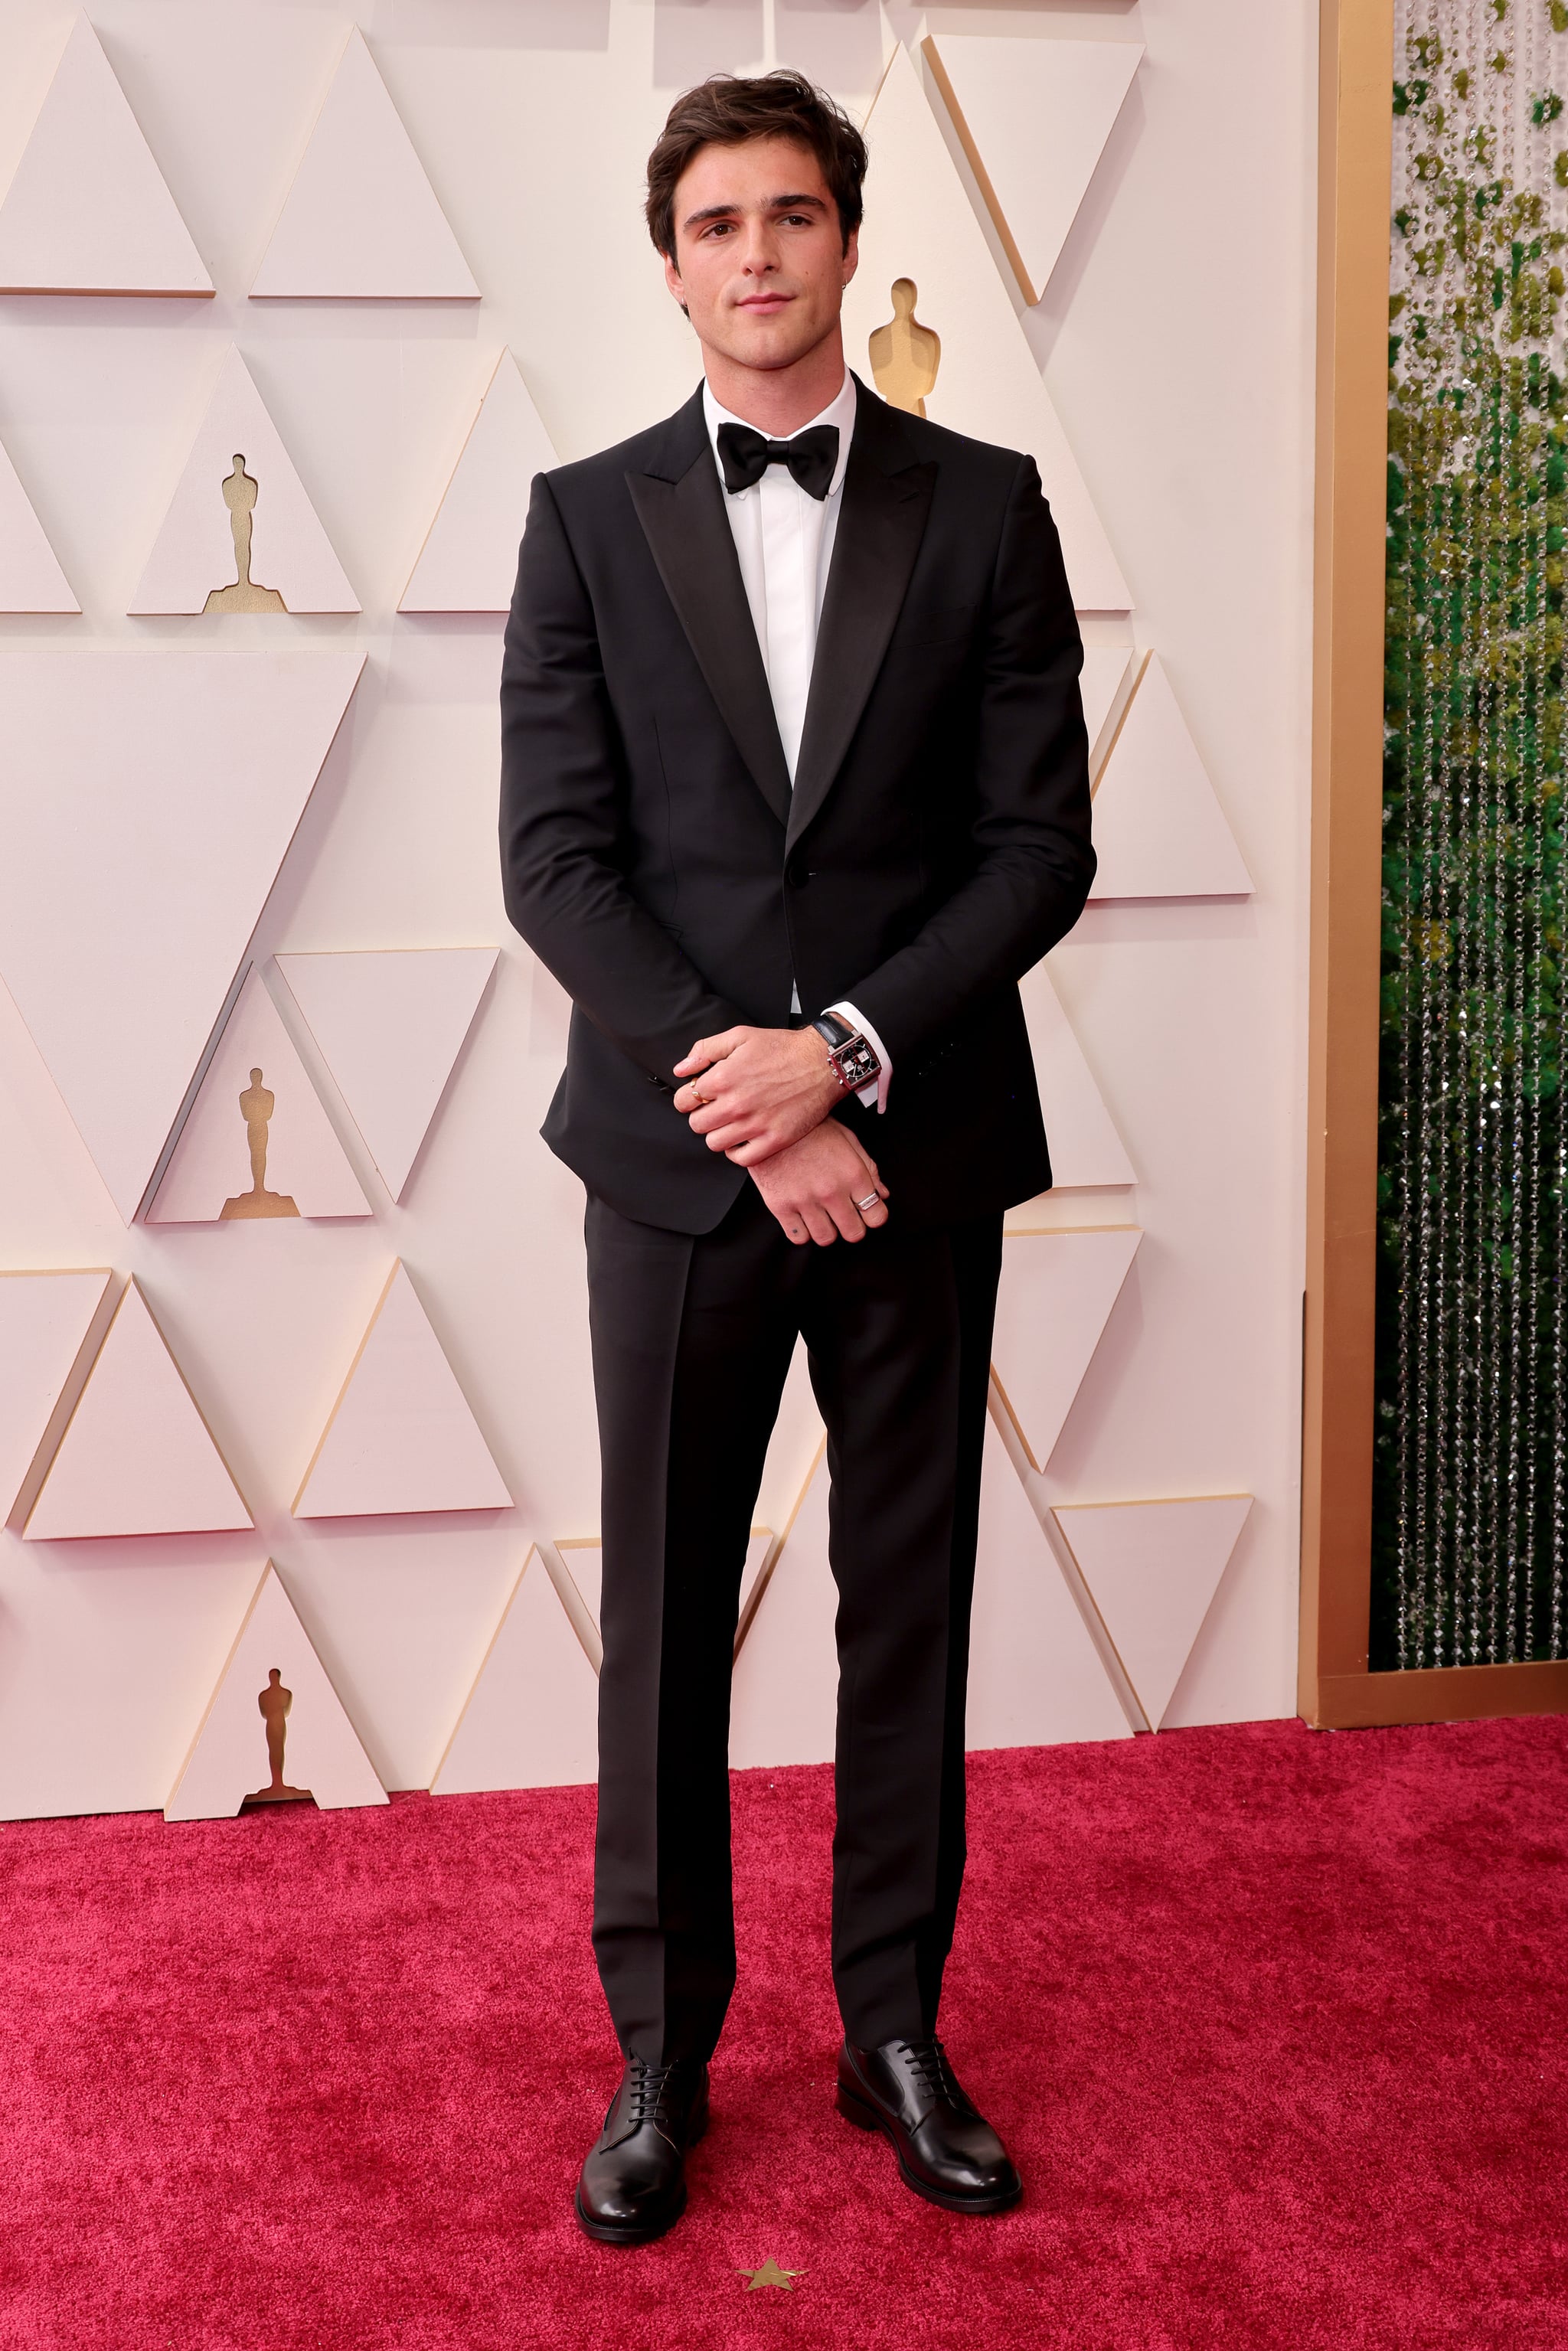 Jacob Elordi at the 2022 Oscars | POPSUGAR Celebrity